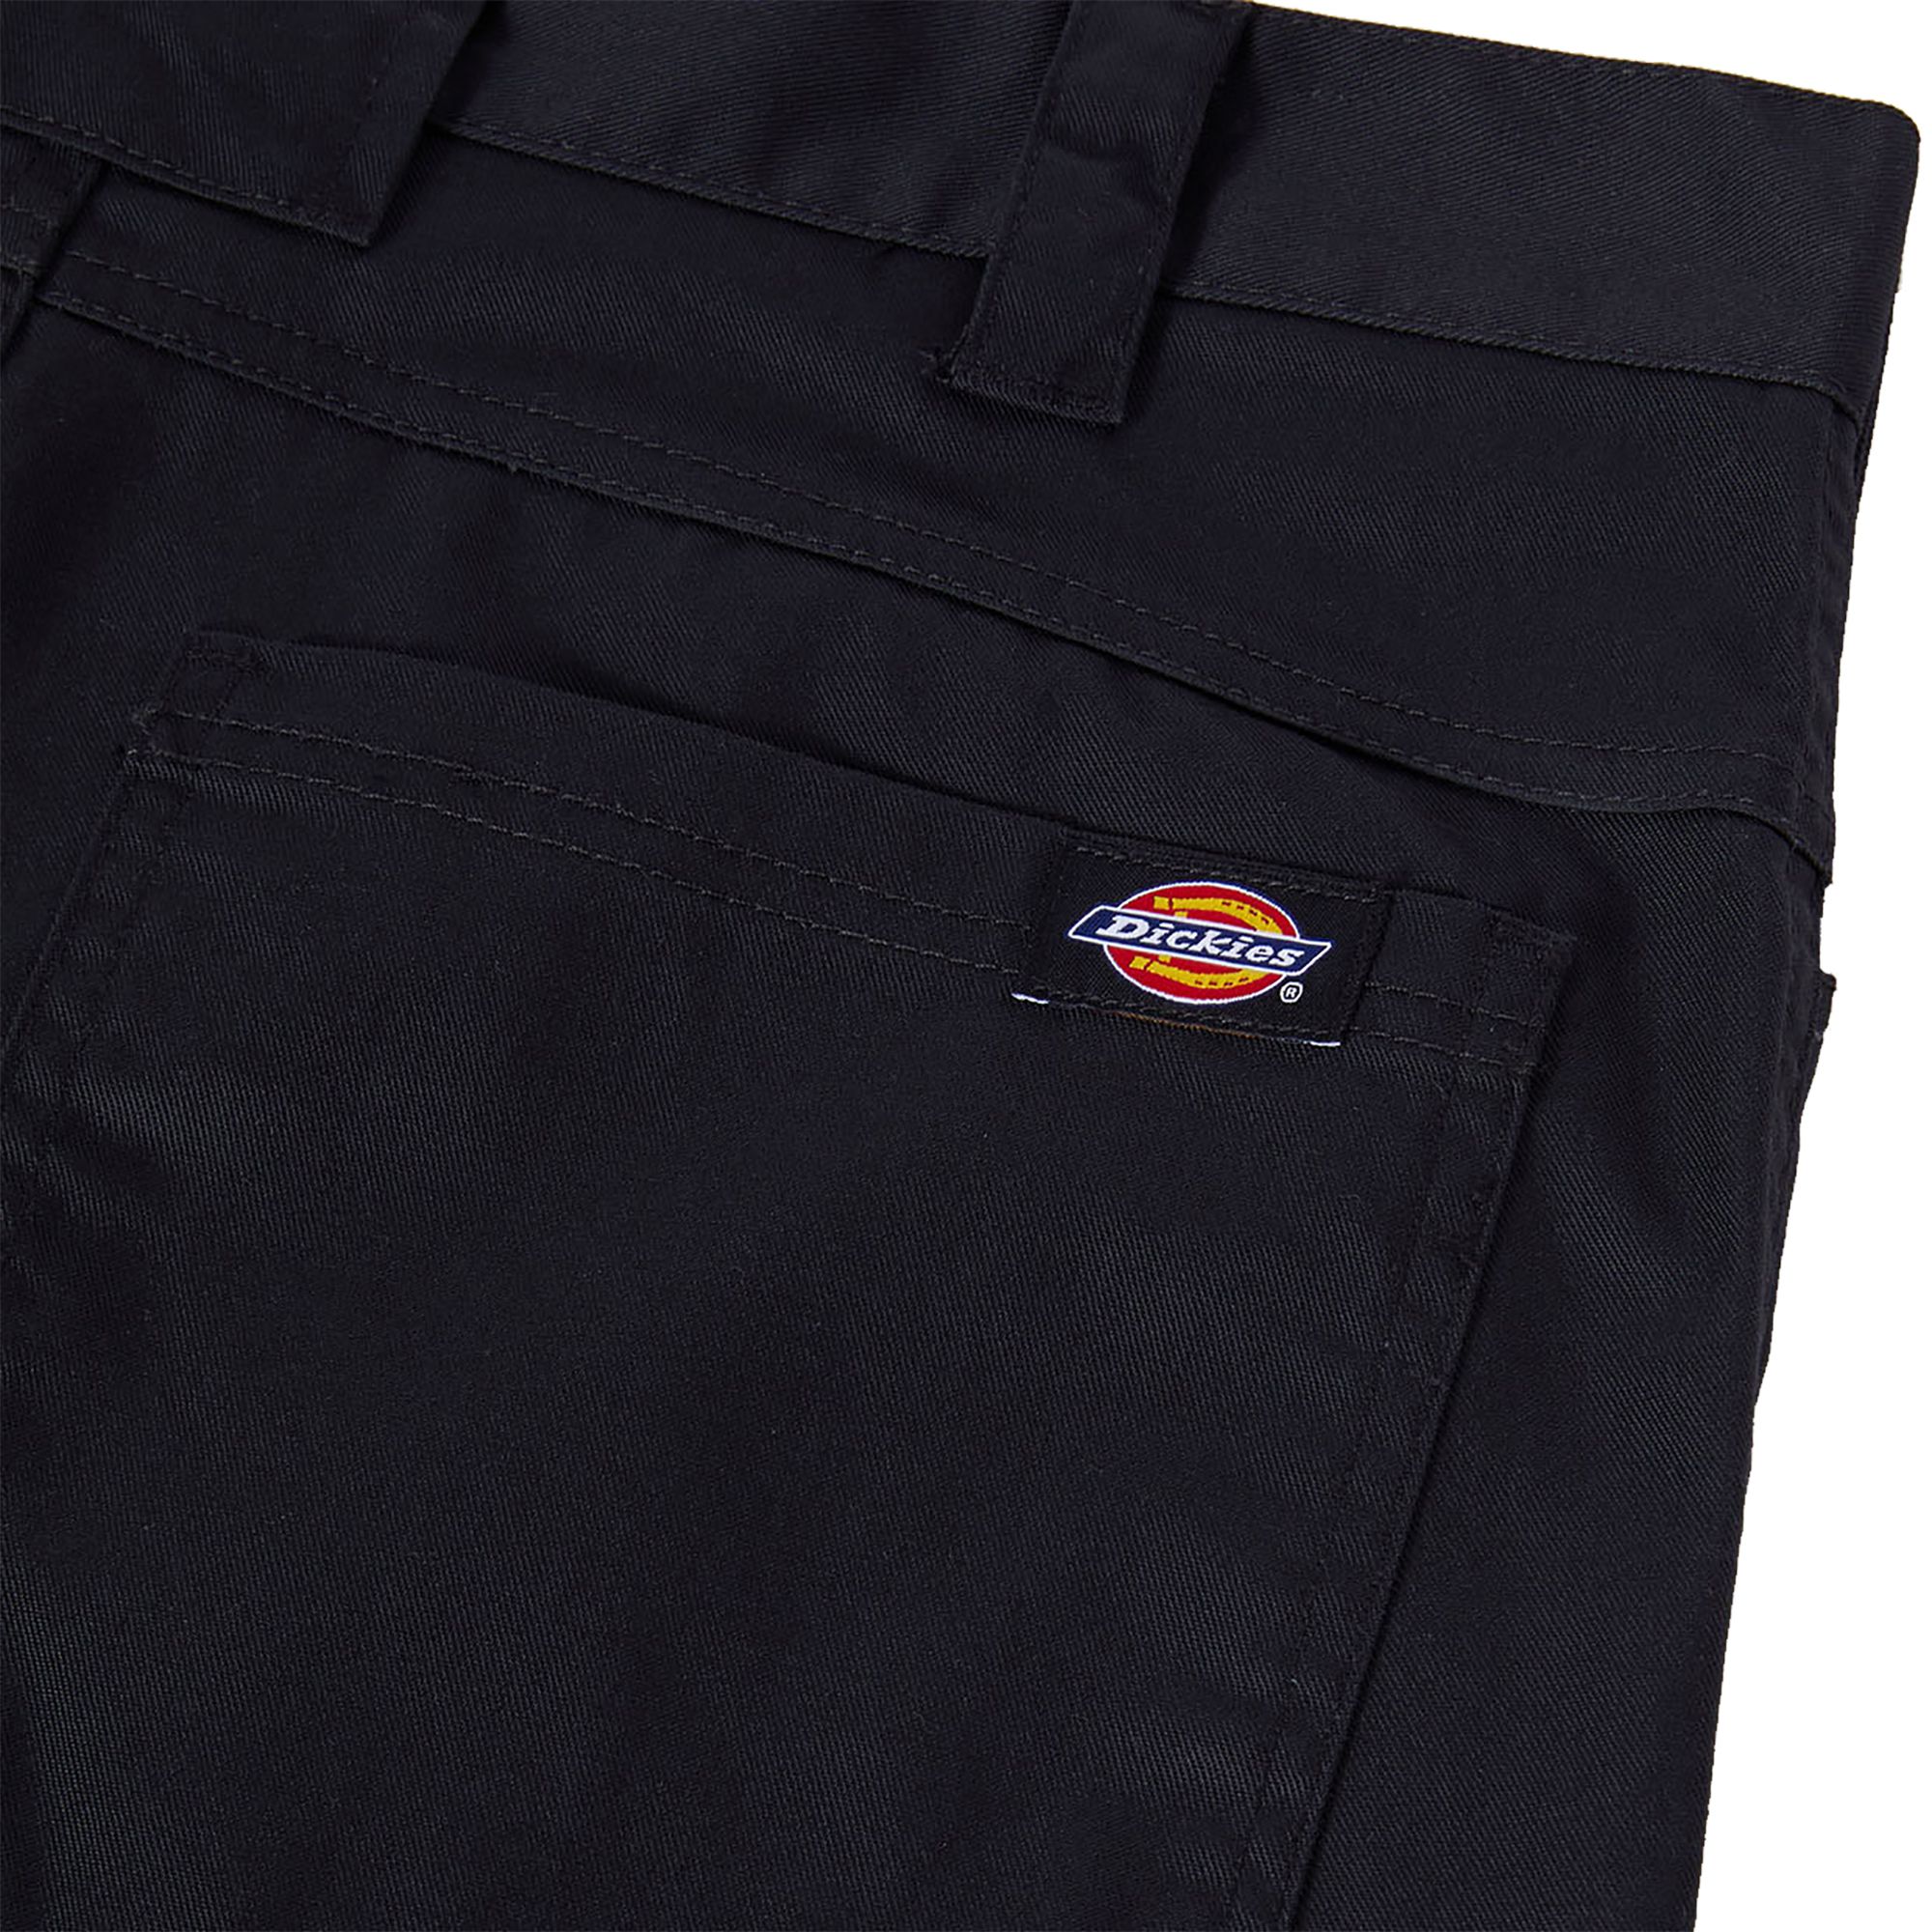 Dickies Action Flex Black Men's Multi-pocket trousers, W38